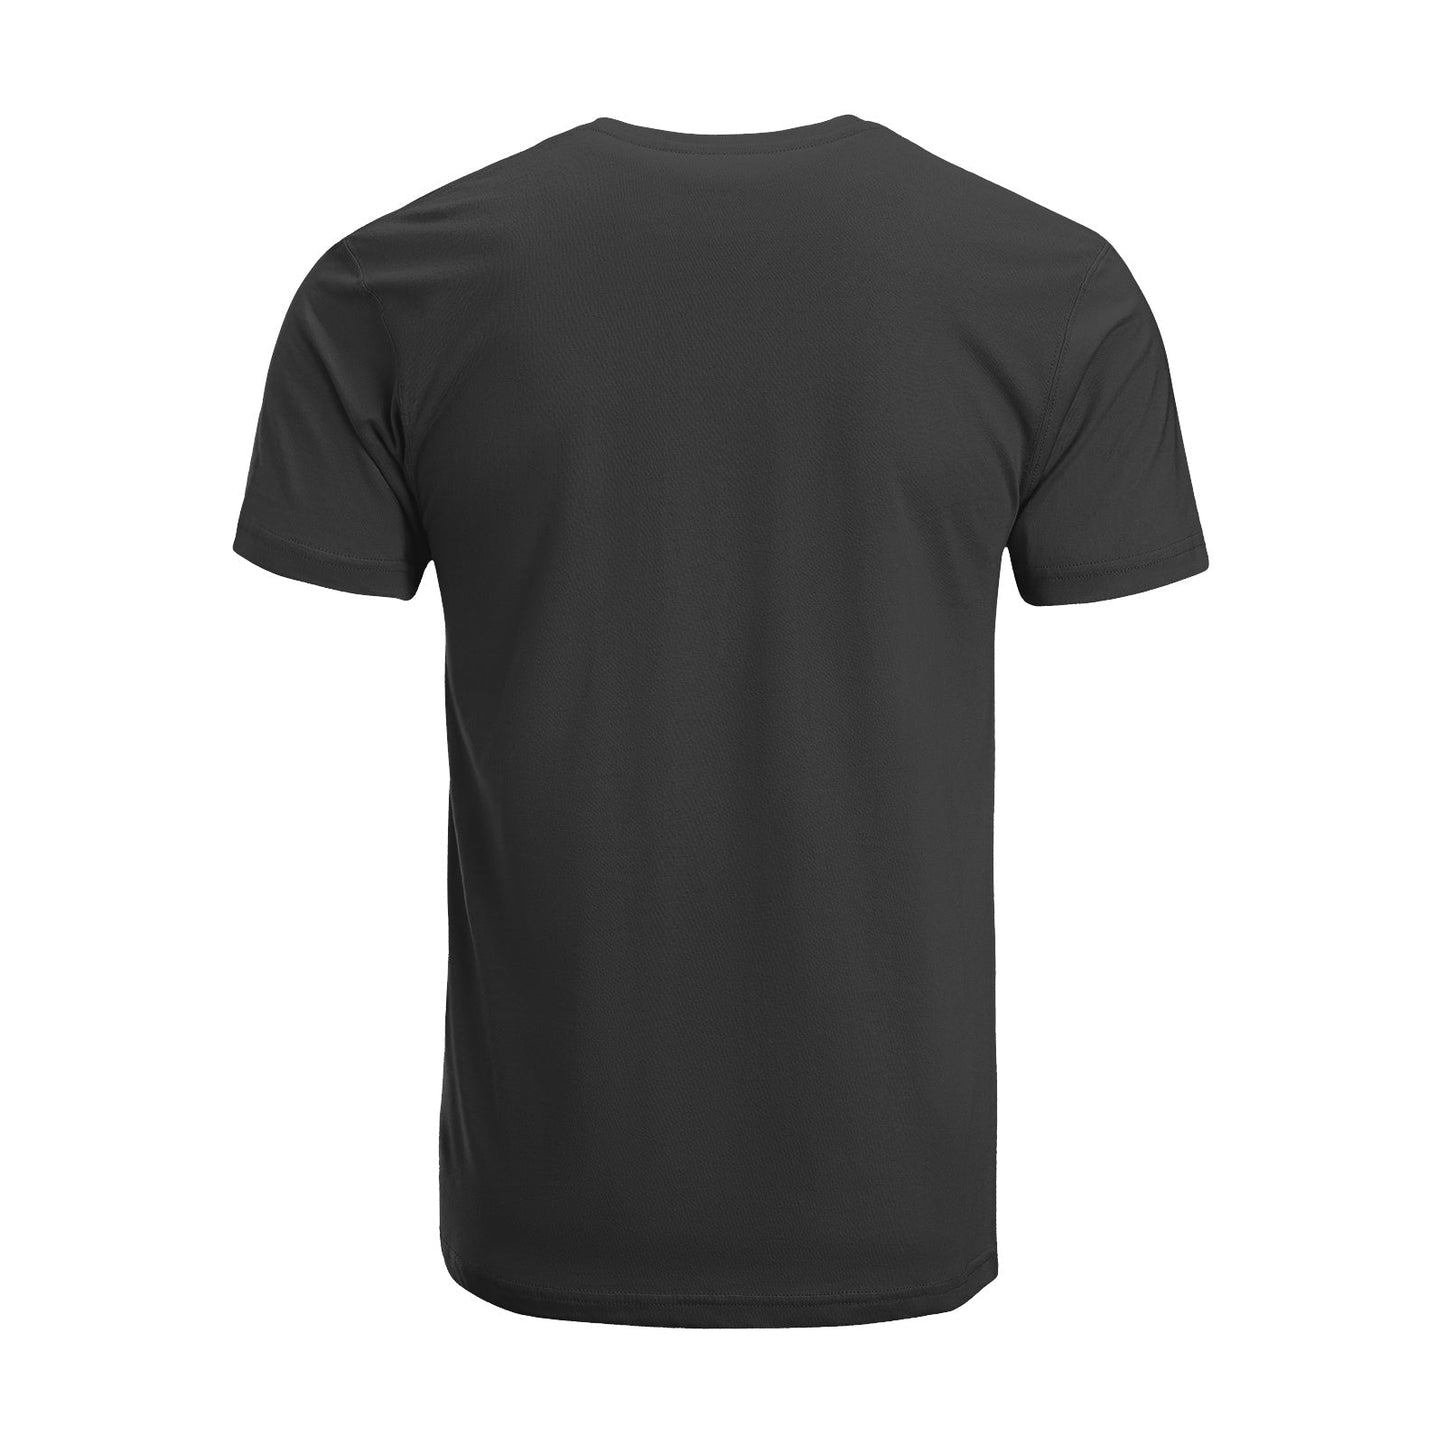 Unisex Short Sleeve Crew Neck Cotton Jersey T-Shirt VEGAN 27